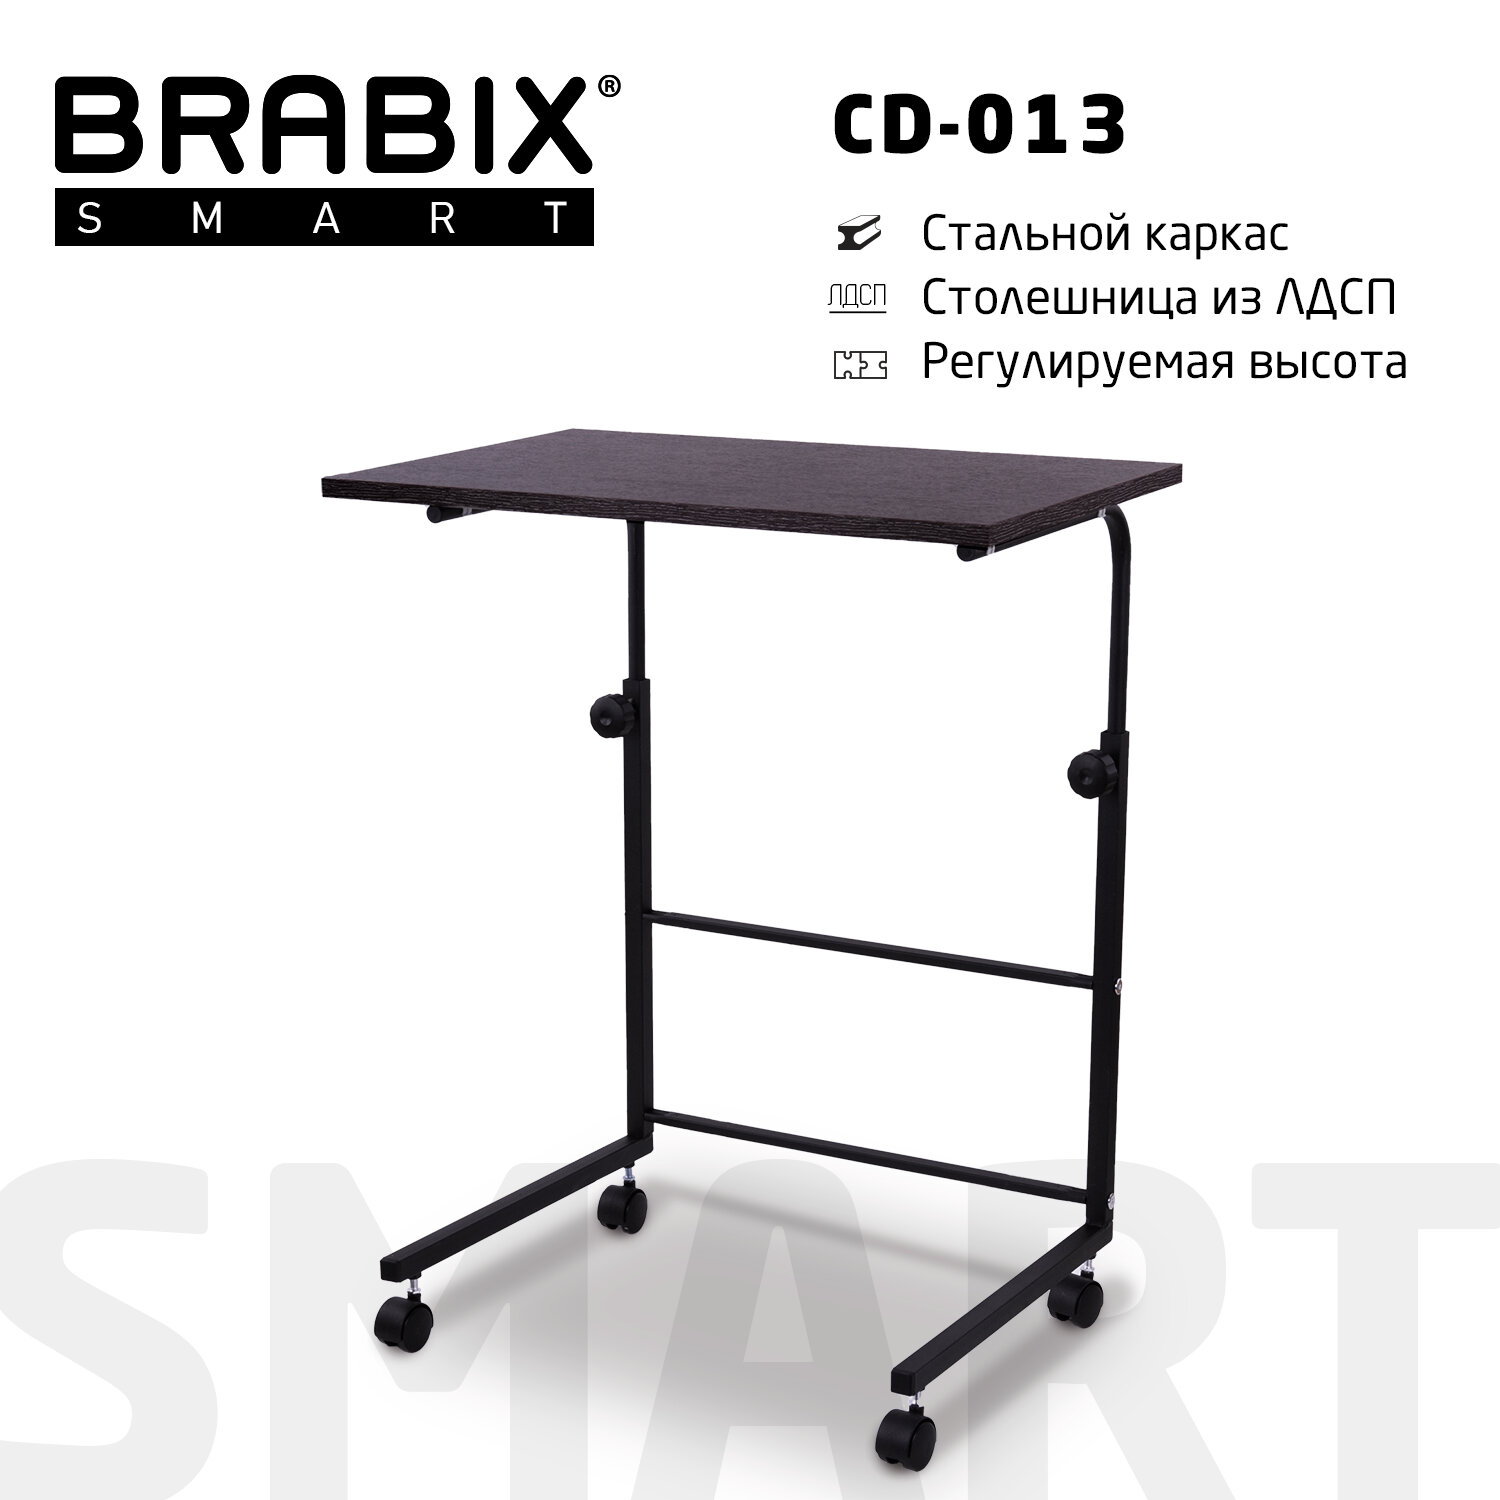  BRABIX Smart CD-013 641883